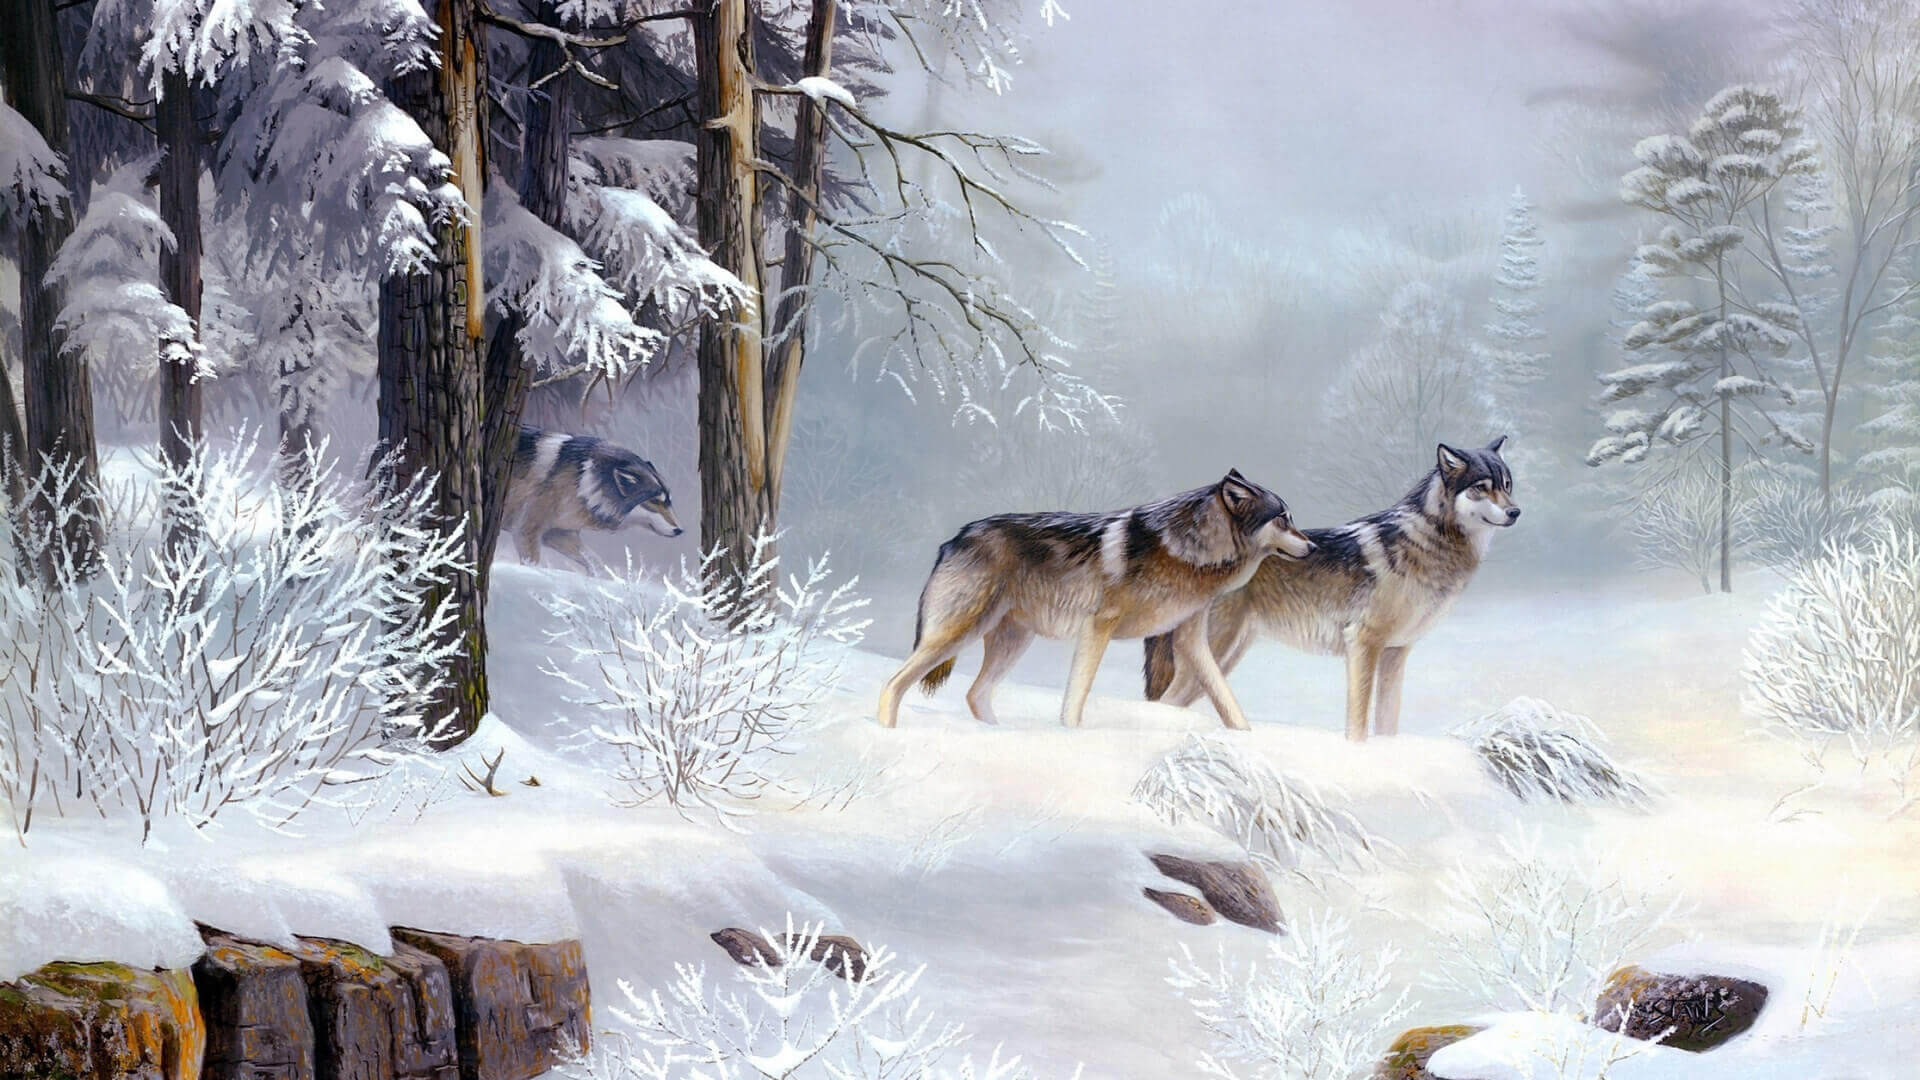 Красивые картинки на заставку про зиму и снег - подборка 31